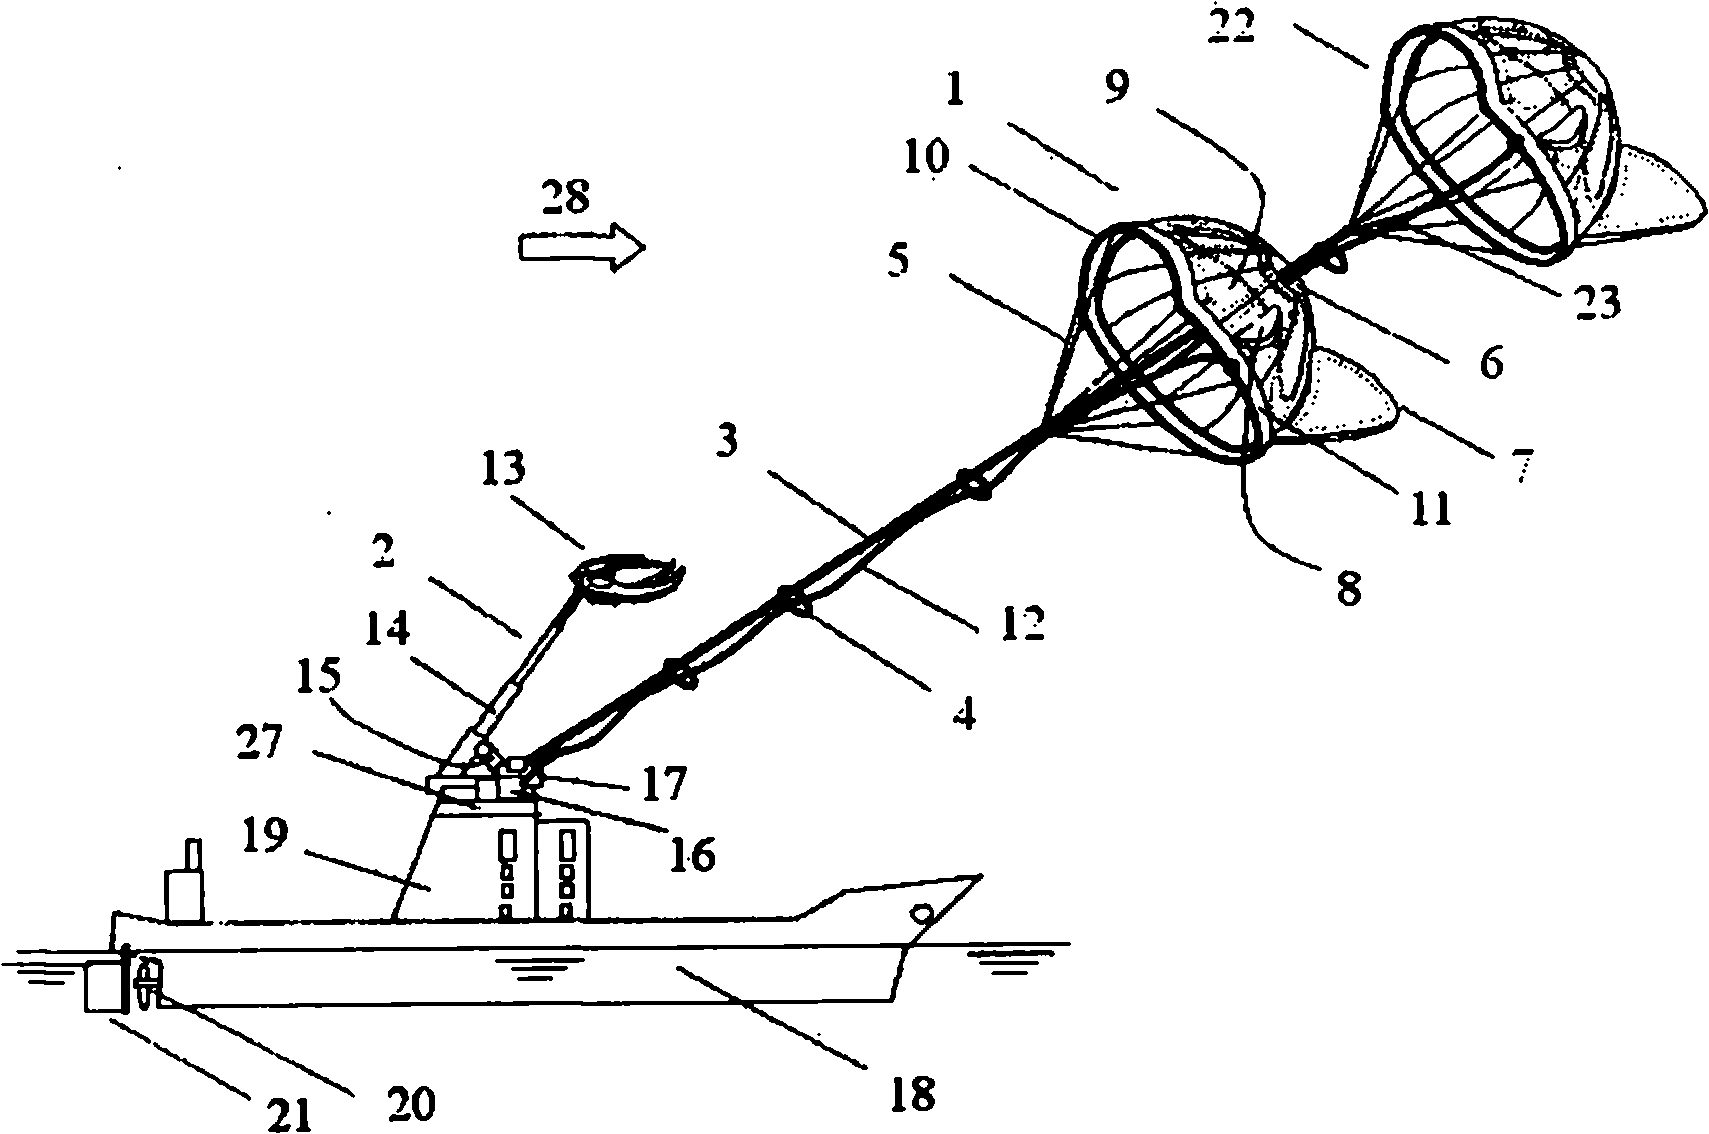 Retractable long-distance suspension wind-energy parasail device for ship navigation